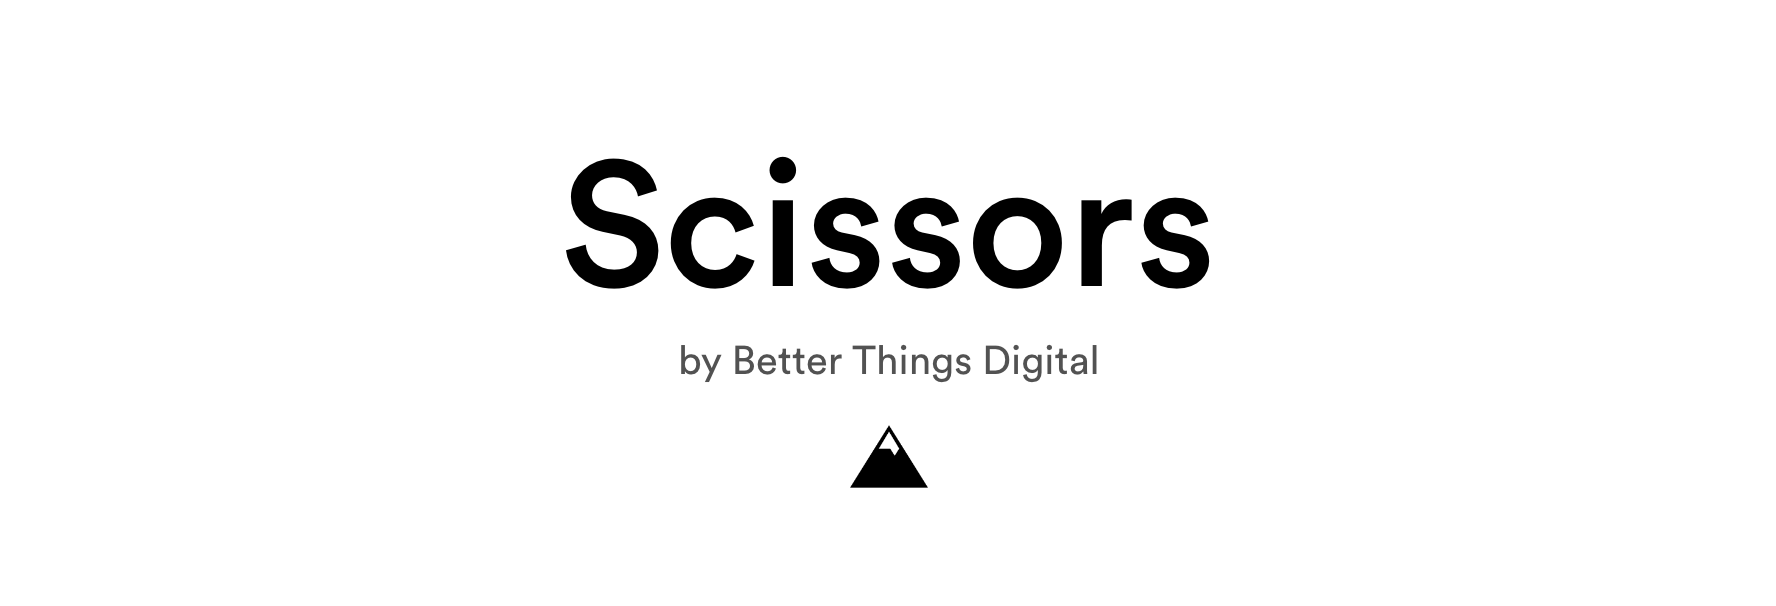 Scissors by Better Things Digital